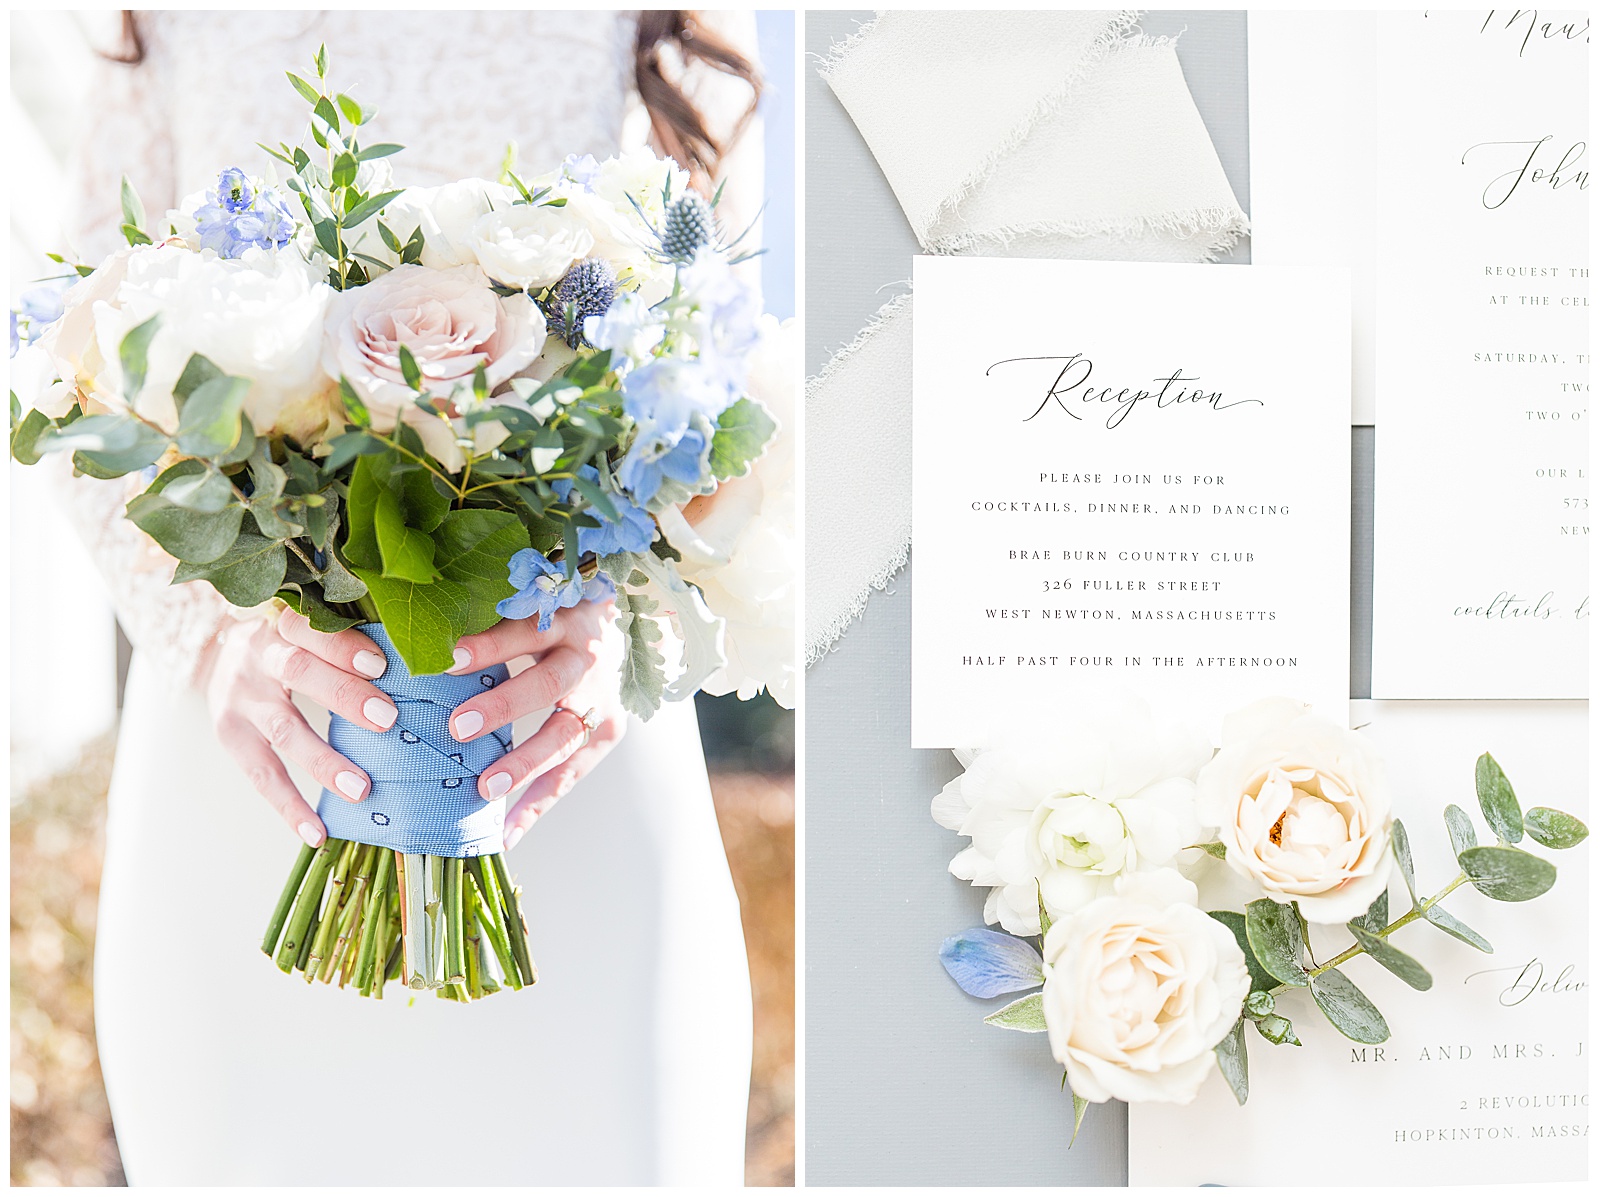 Shine invitation suite and bride's father's tie around bouquet